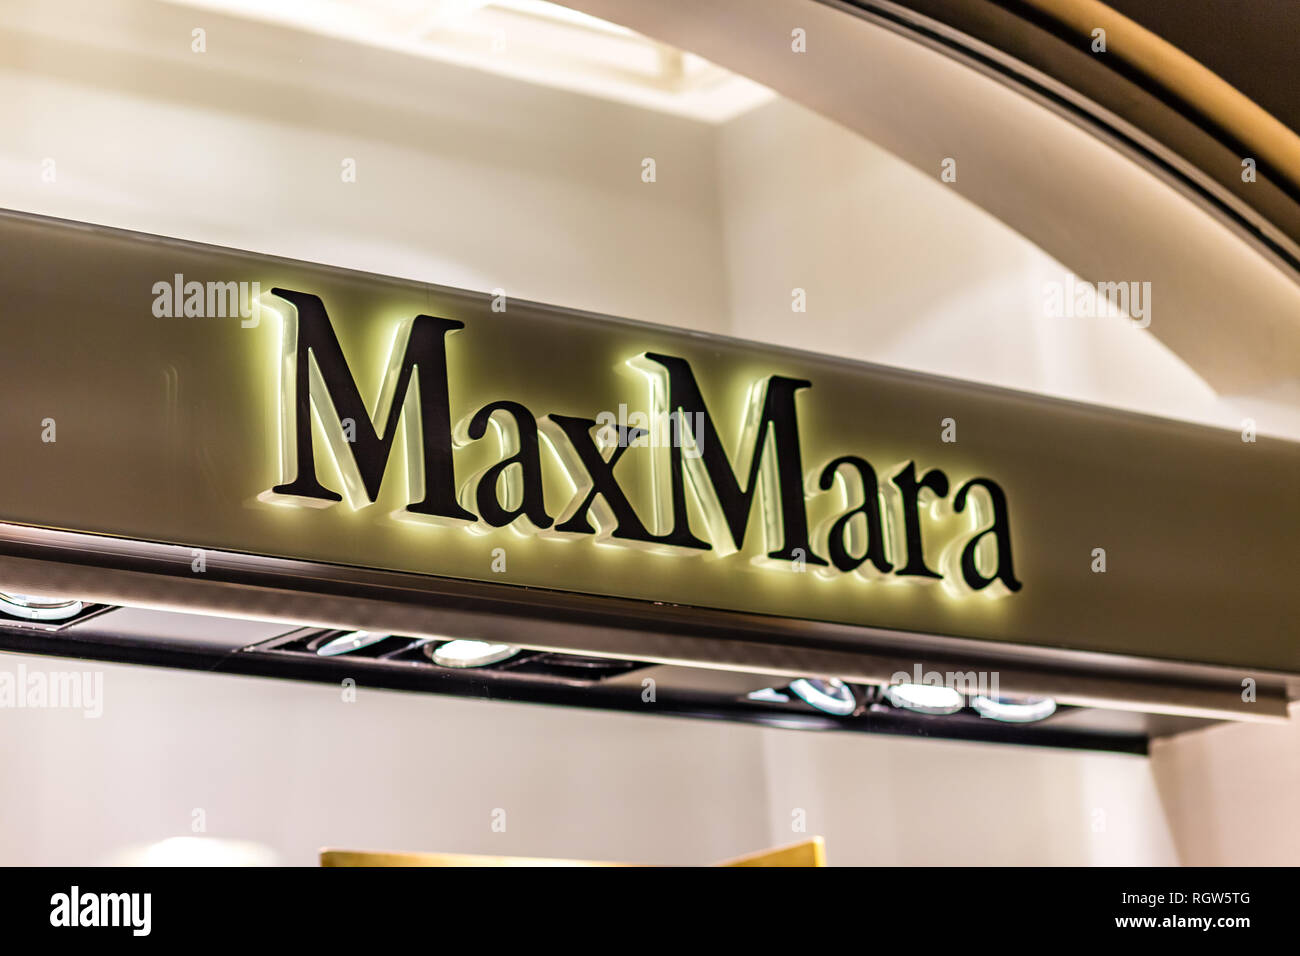 RAVENNA, Italia - 17 gennaio 2019: luci sono illuminanti MaxMara logo sulla vetrina Foto Stock